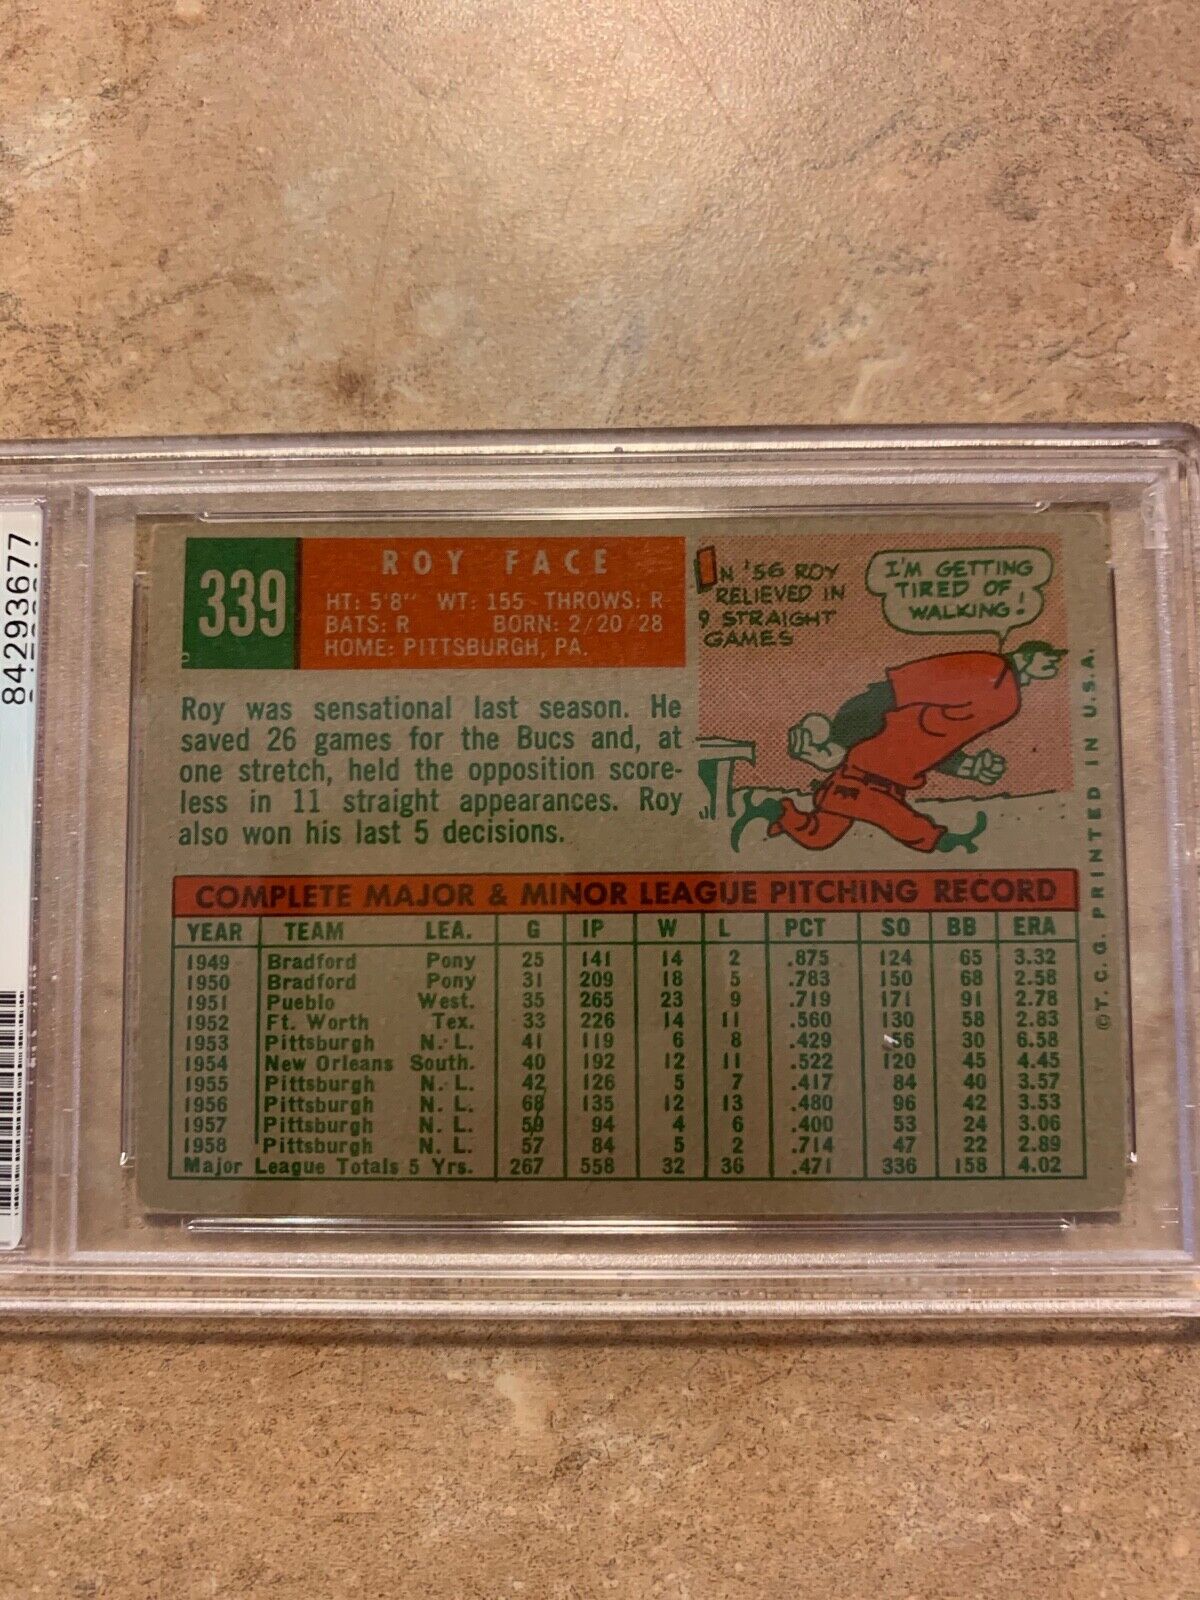 El Roy Face Autographed 1959 Topps Baseball Card 339 PSA Certified & Slabbed